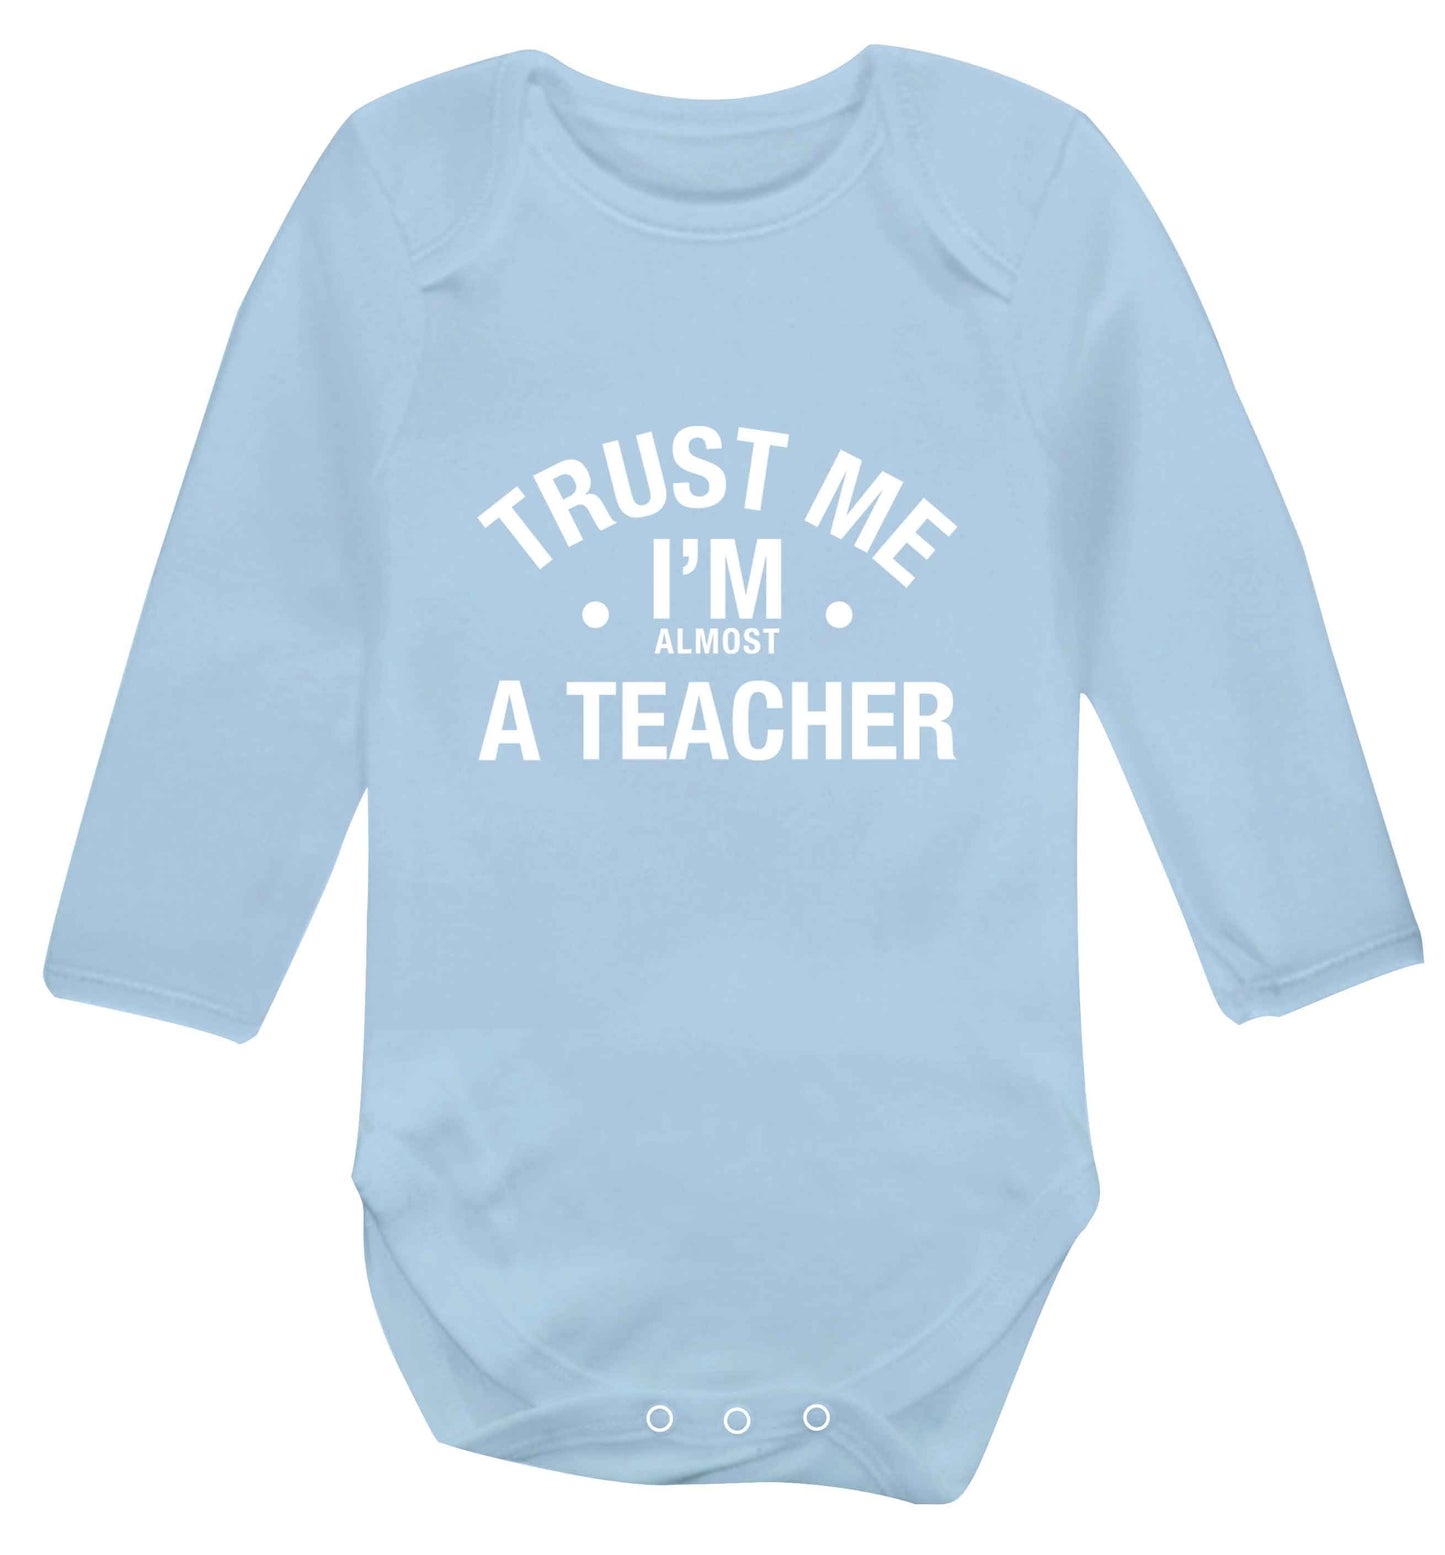 Trust me I'm almost a teacher baby vest long sleeved pale blue 6-12 months